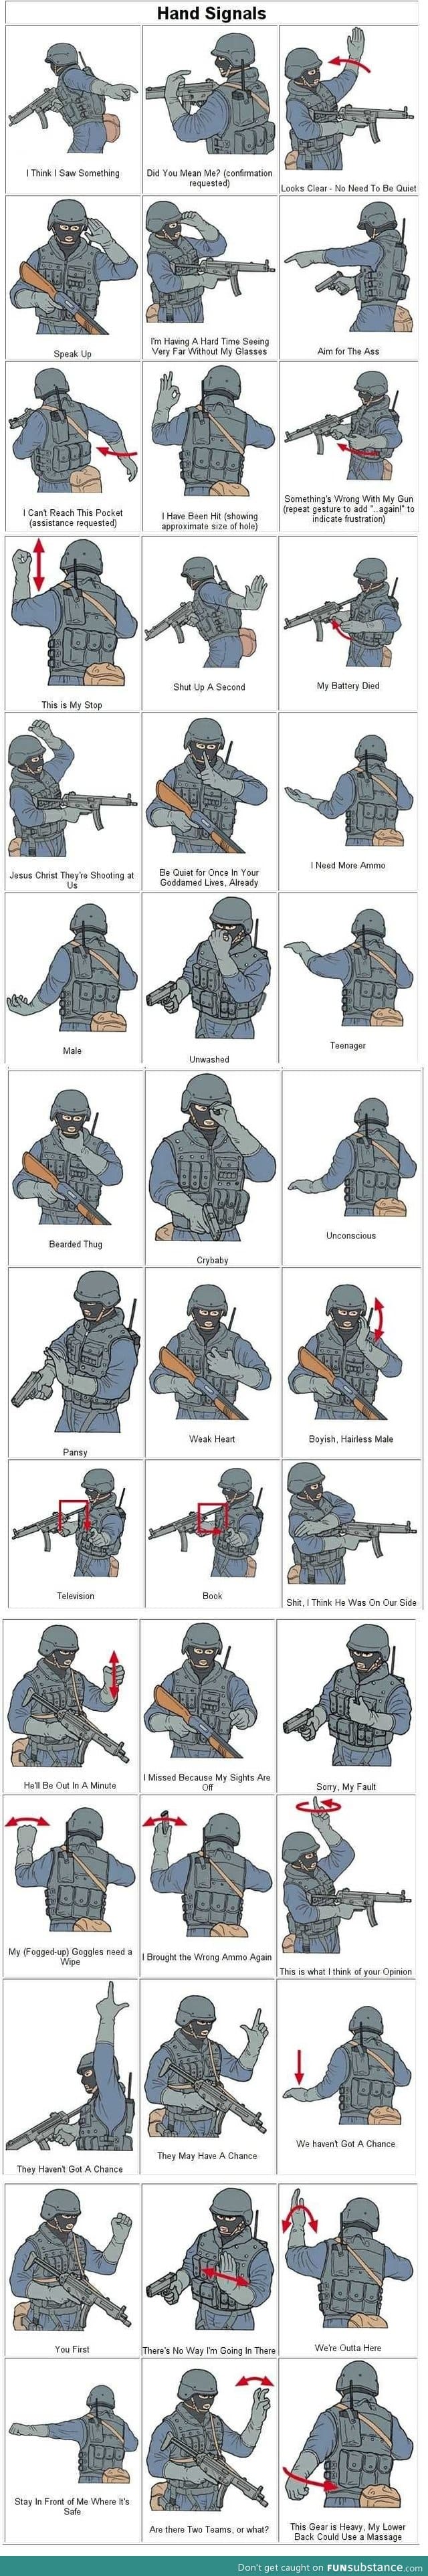 Military sign language